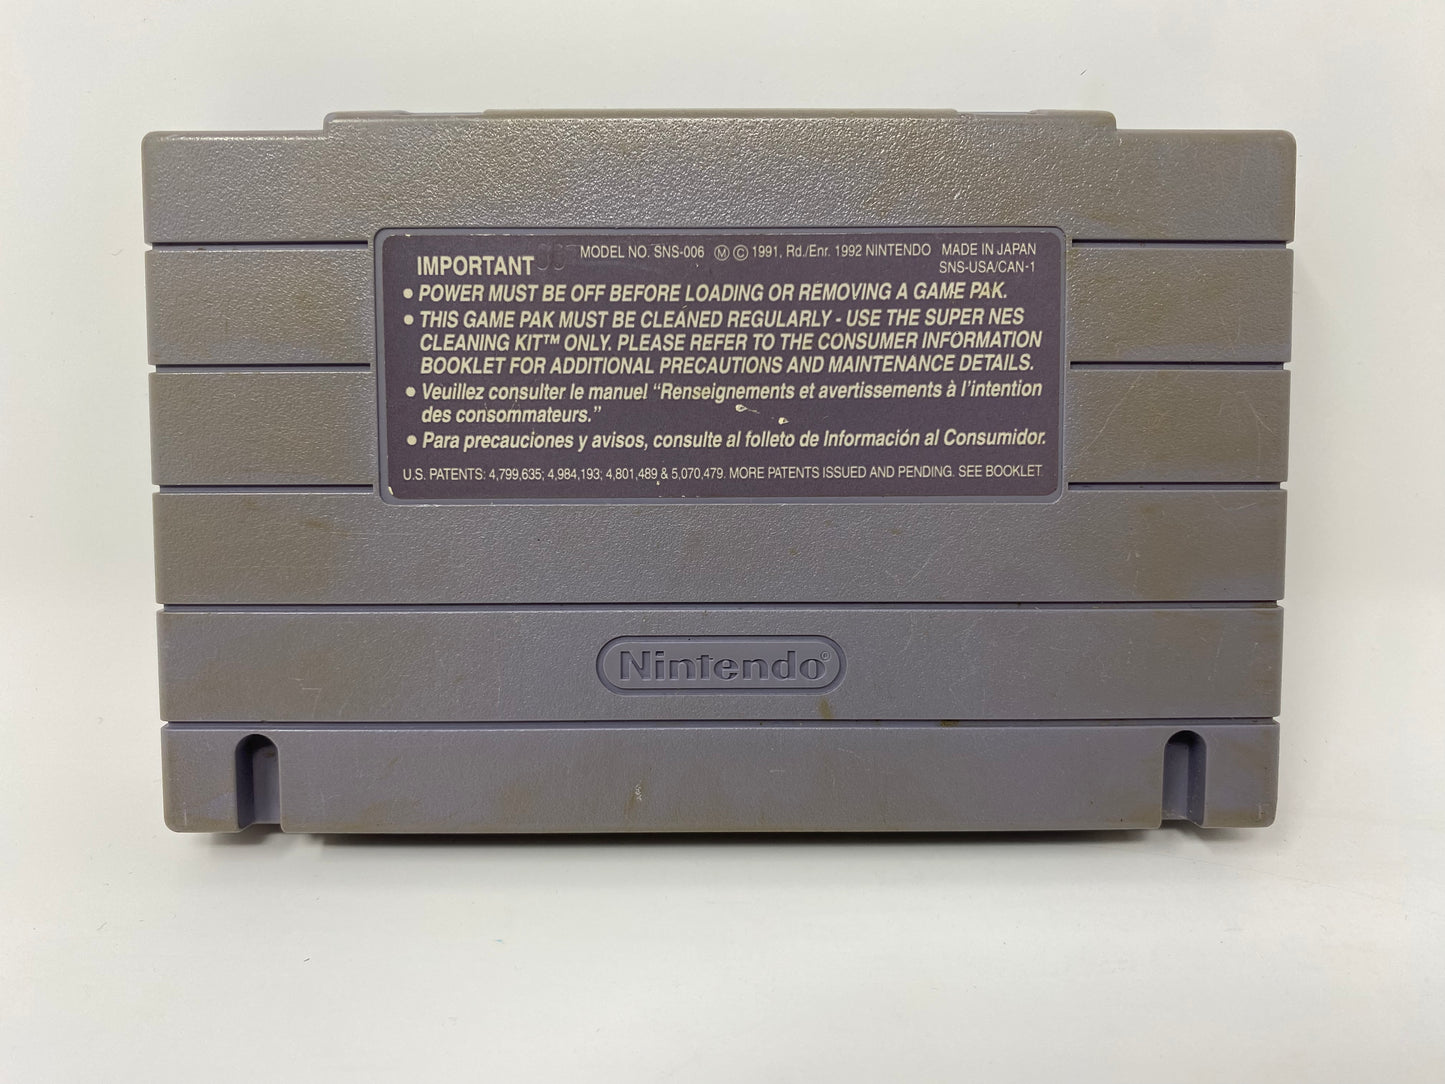 SNES Super Nintendo - Secret of Mana - CIB Complete in Box